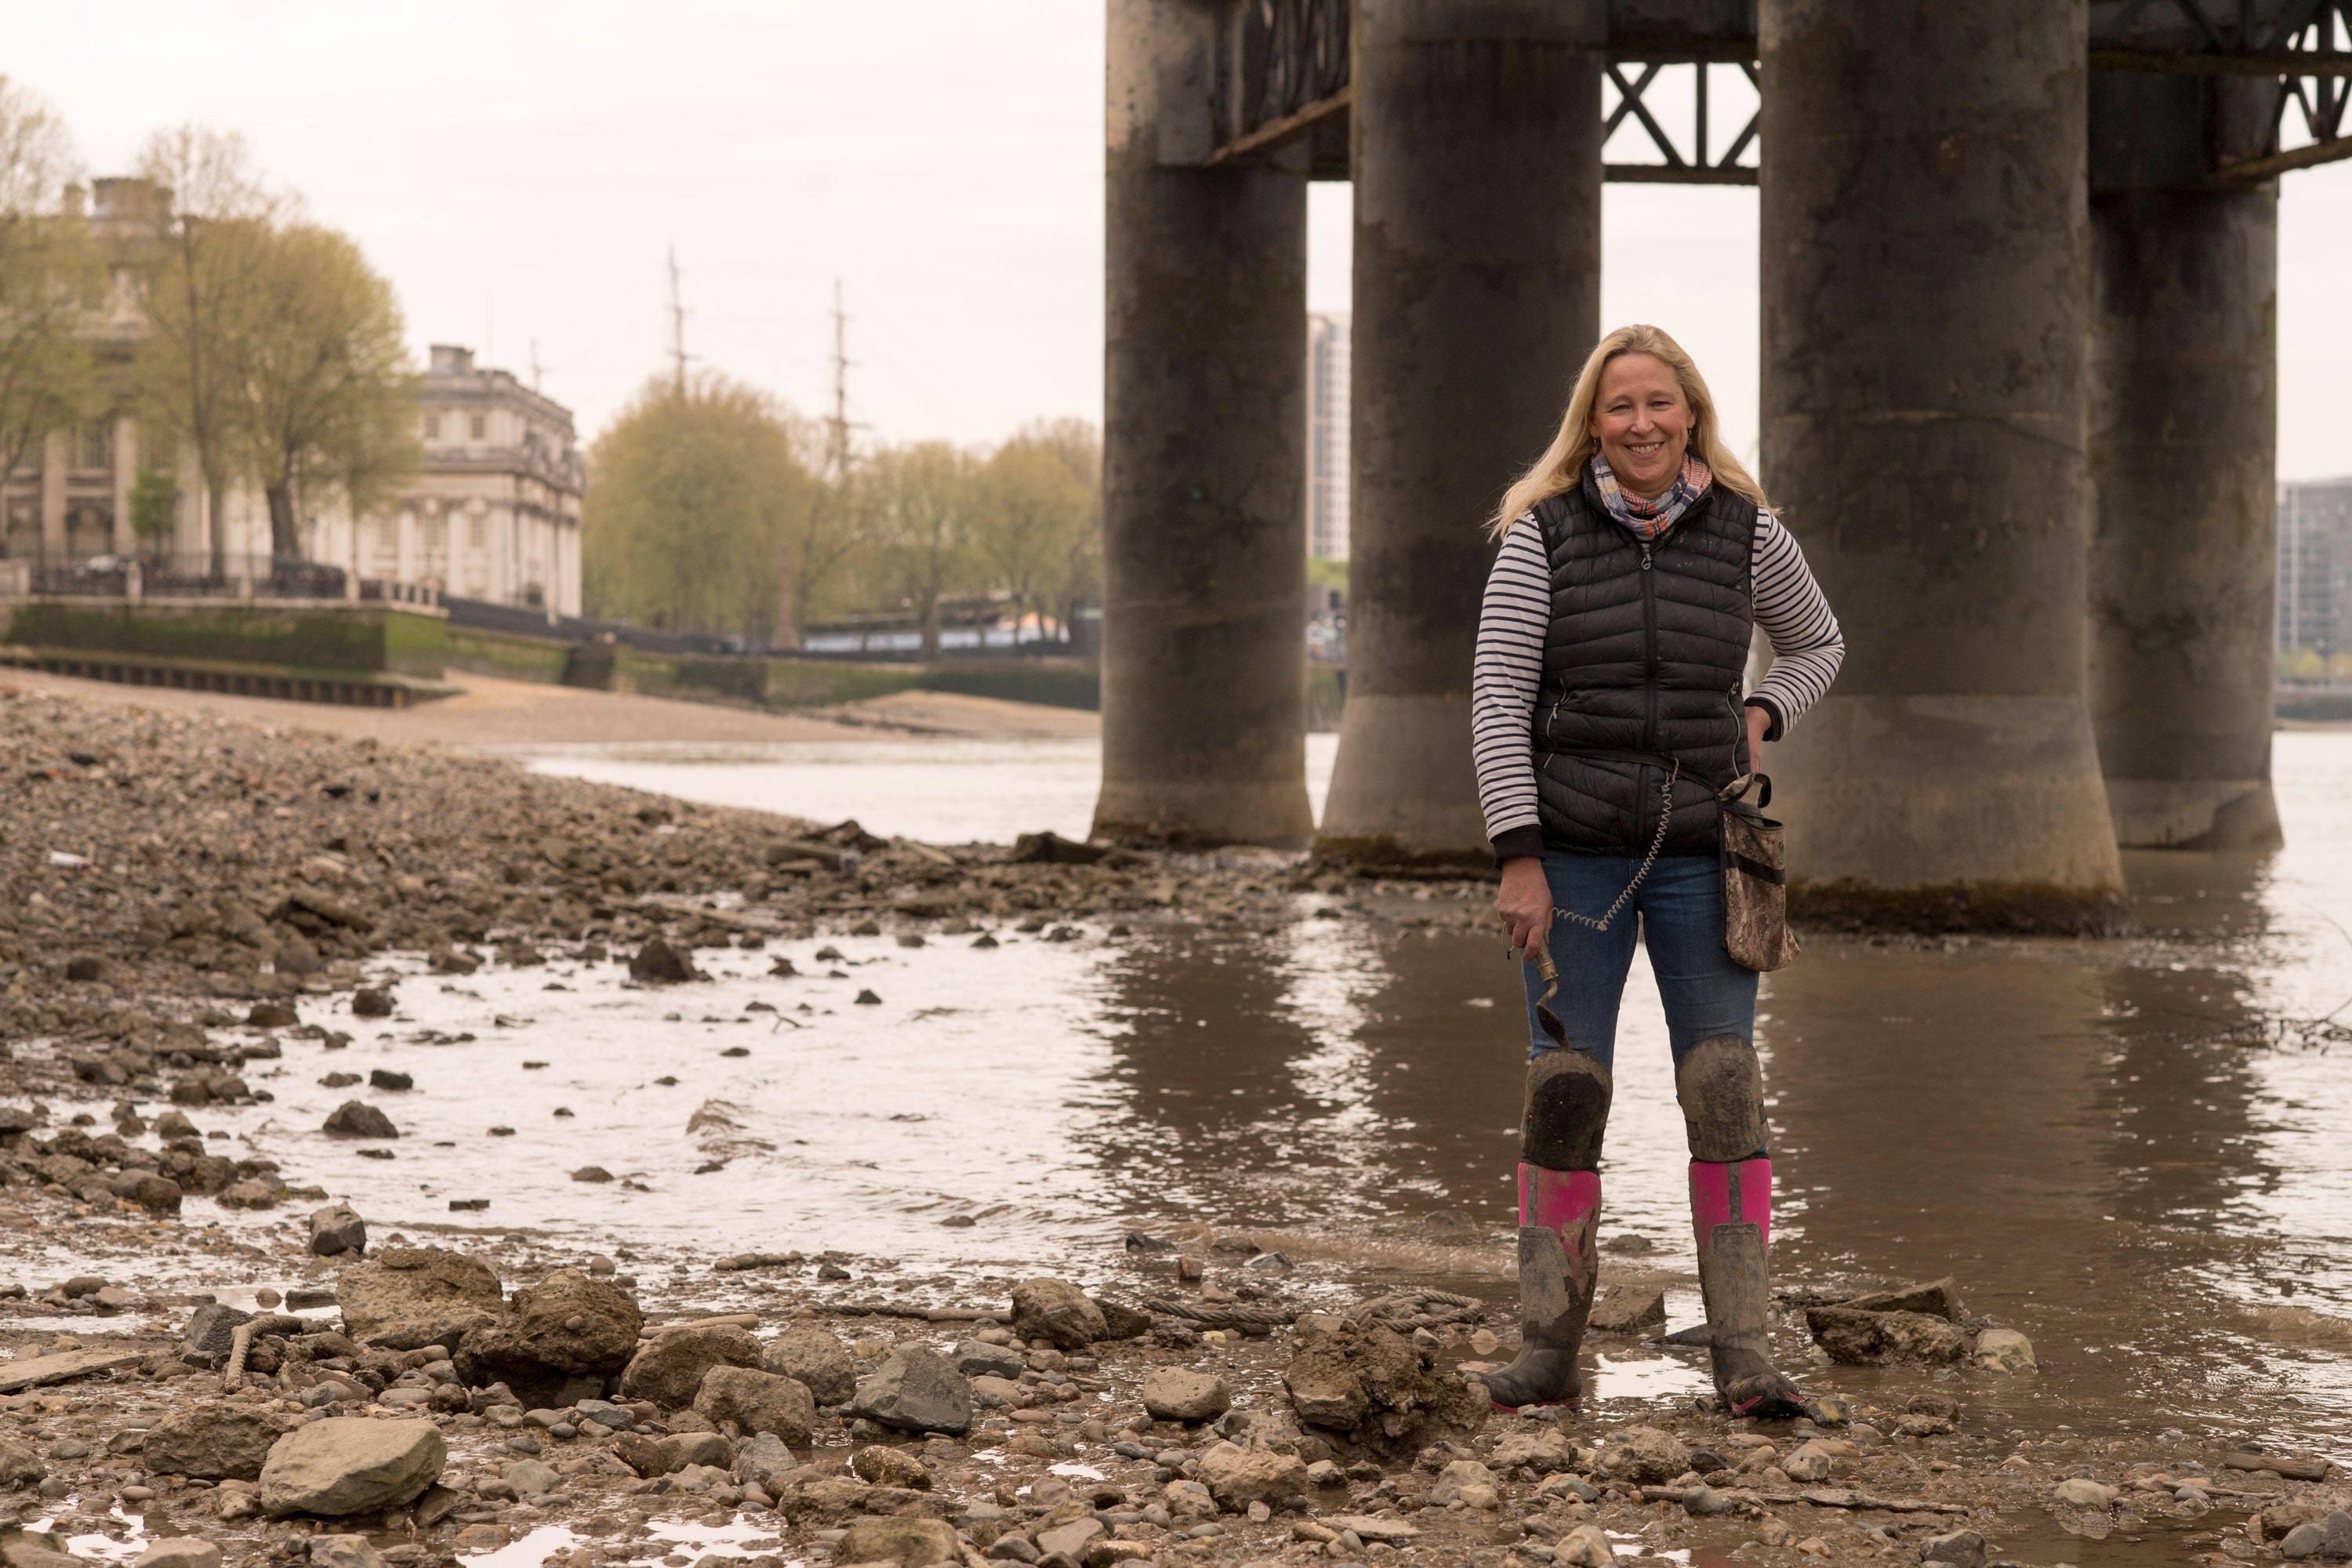 Nicola White stood on the muddy Thames shore, underneath a bridge